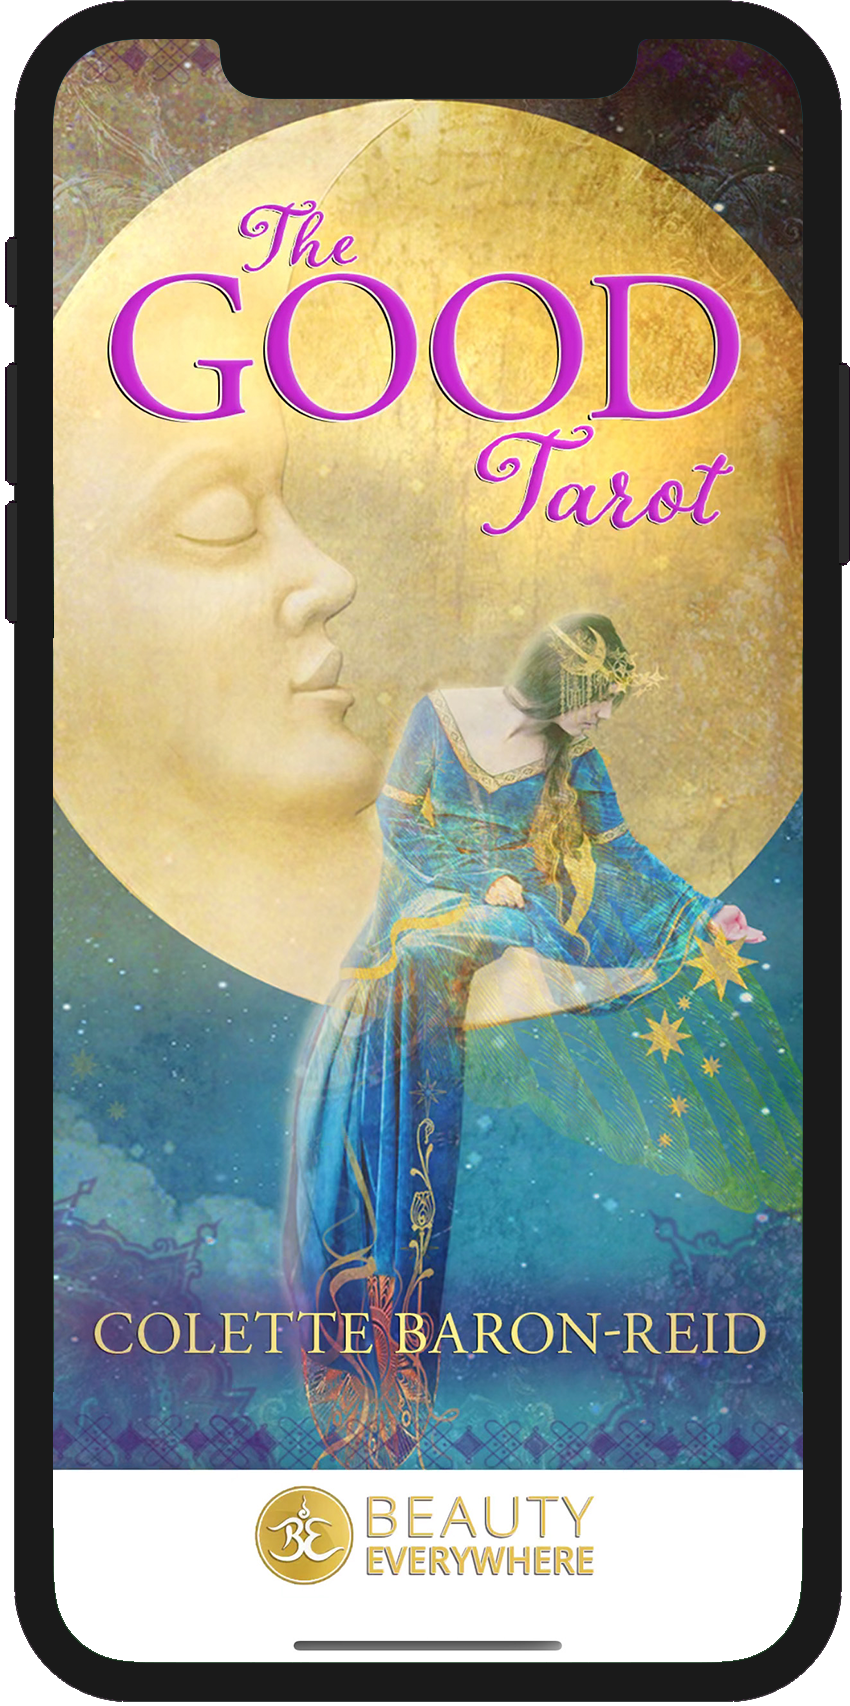 The Good Tarot by Colette Baron-Reid